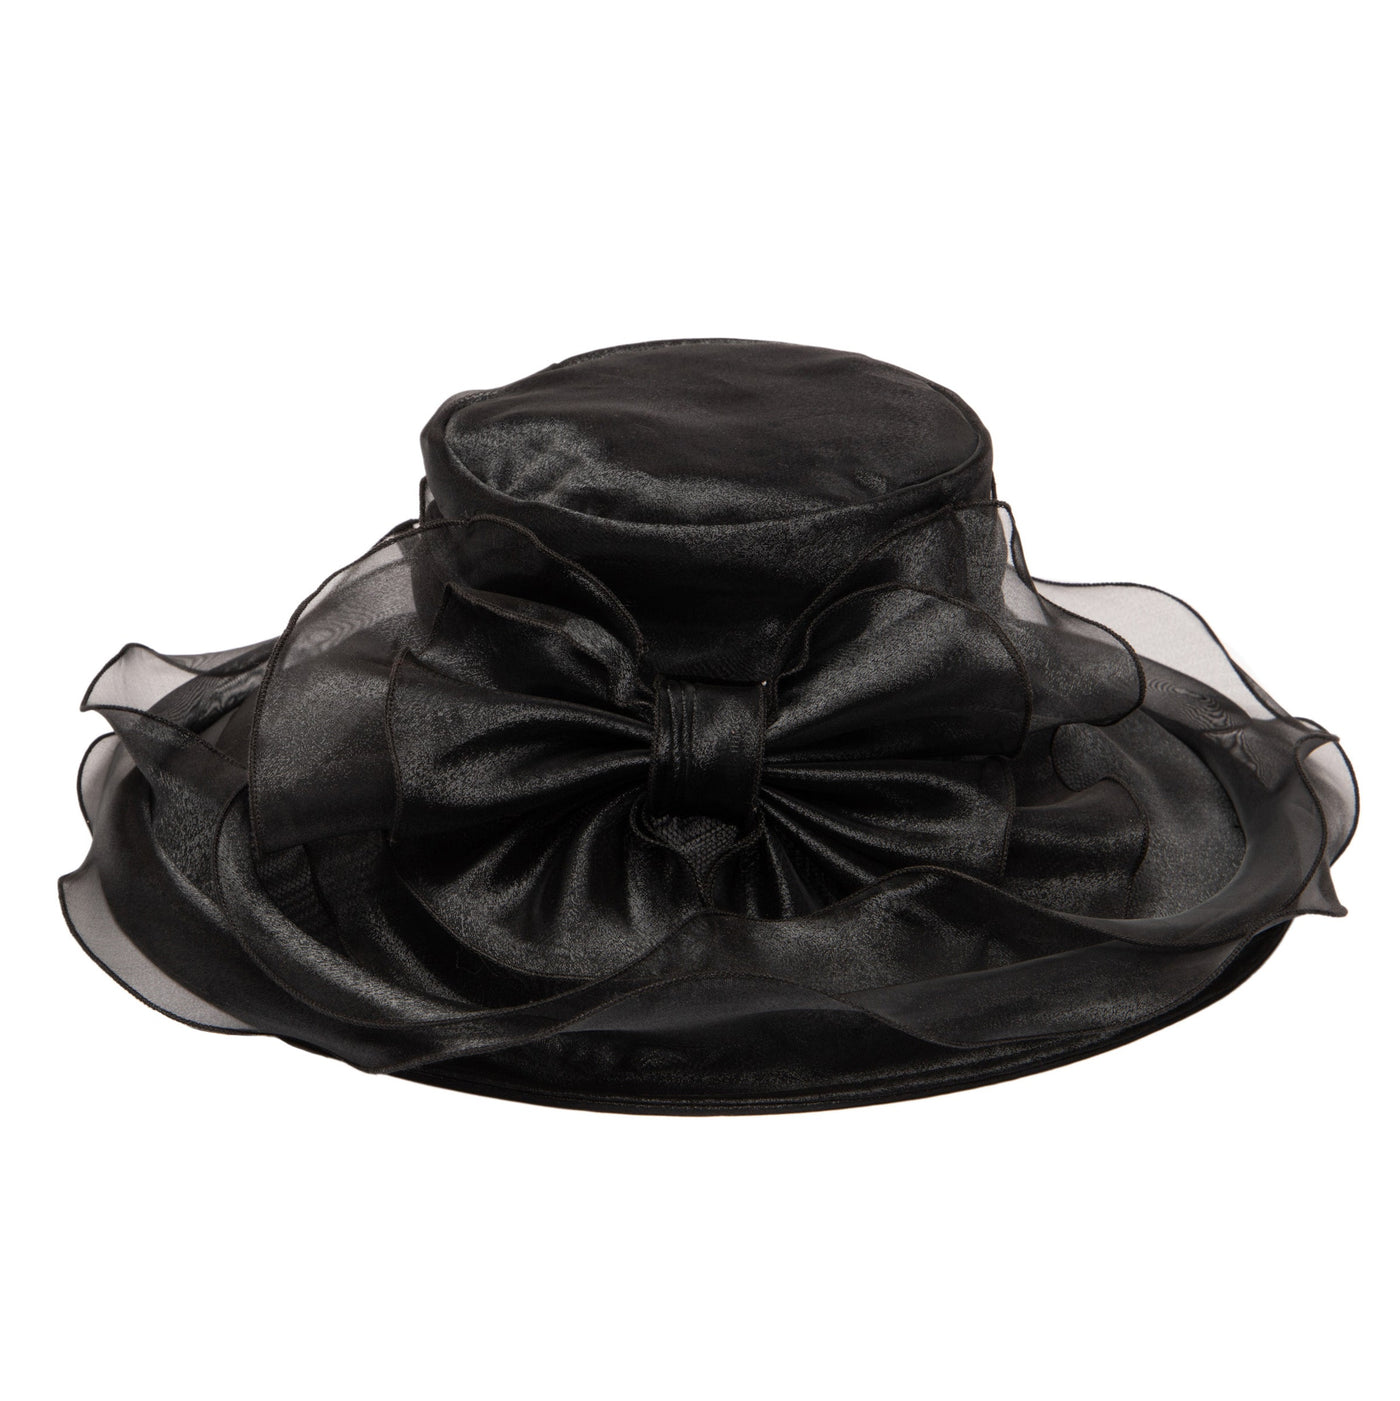 DRESS - Womens Organza Bow Hat